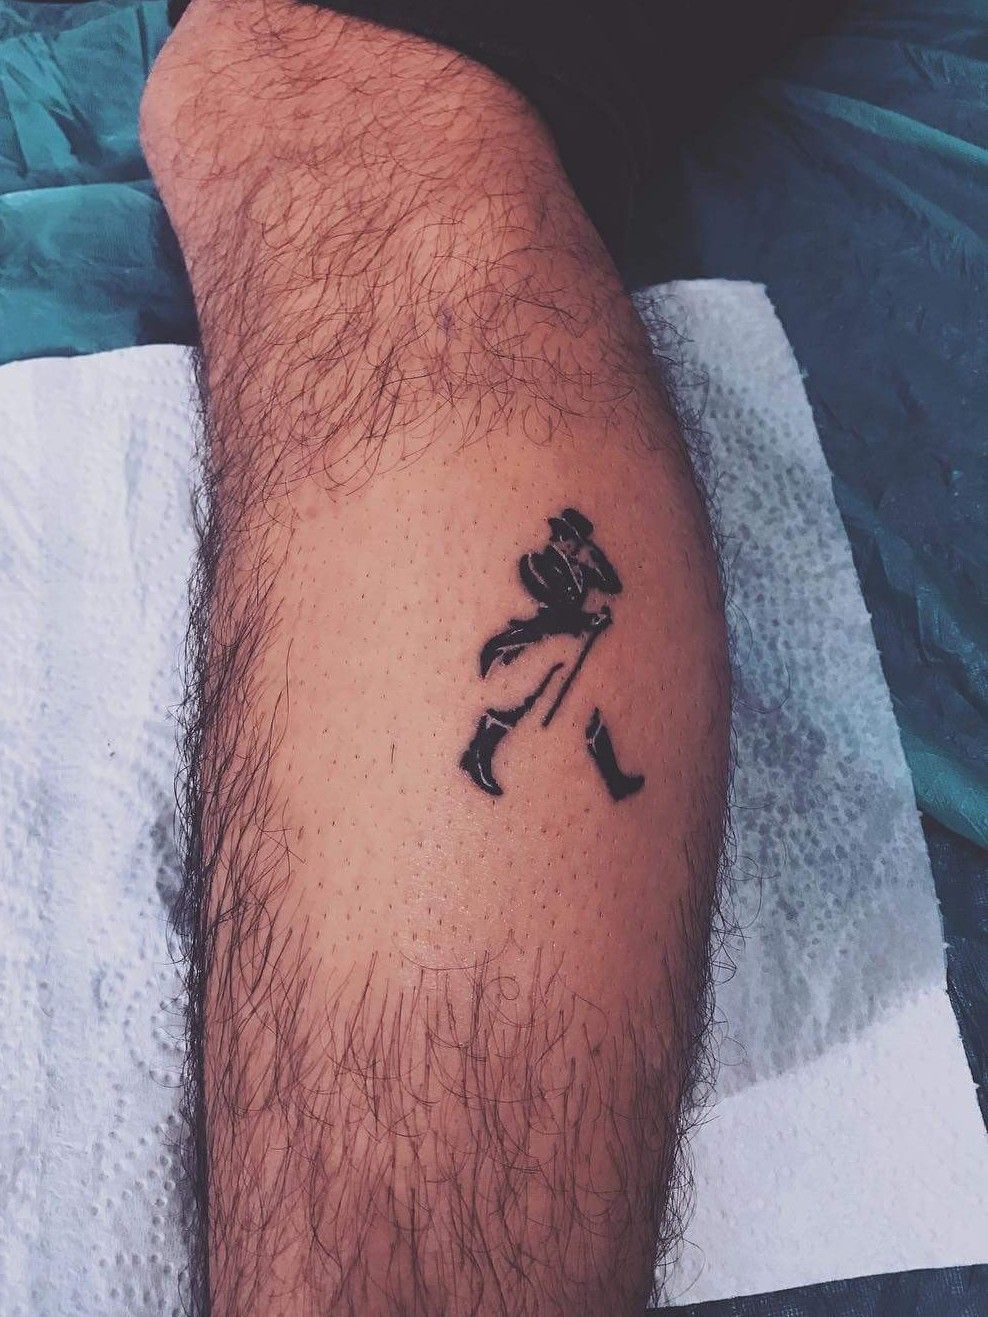 Details more than 125 alan walker symbol tattoo latest